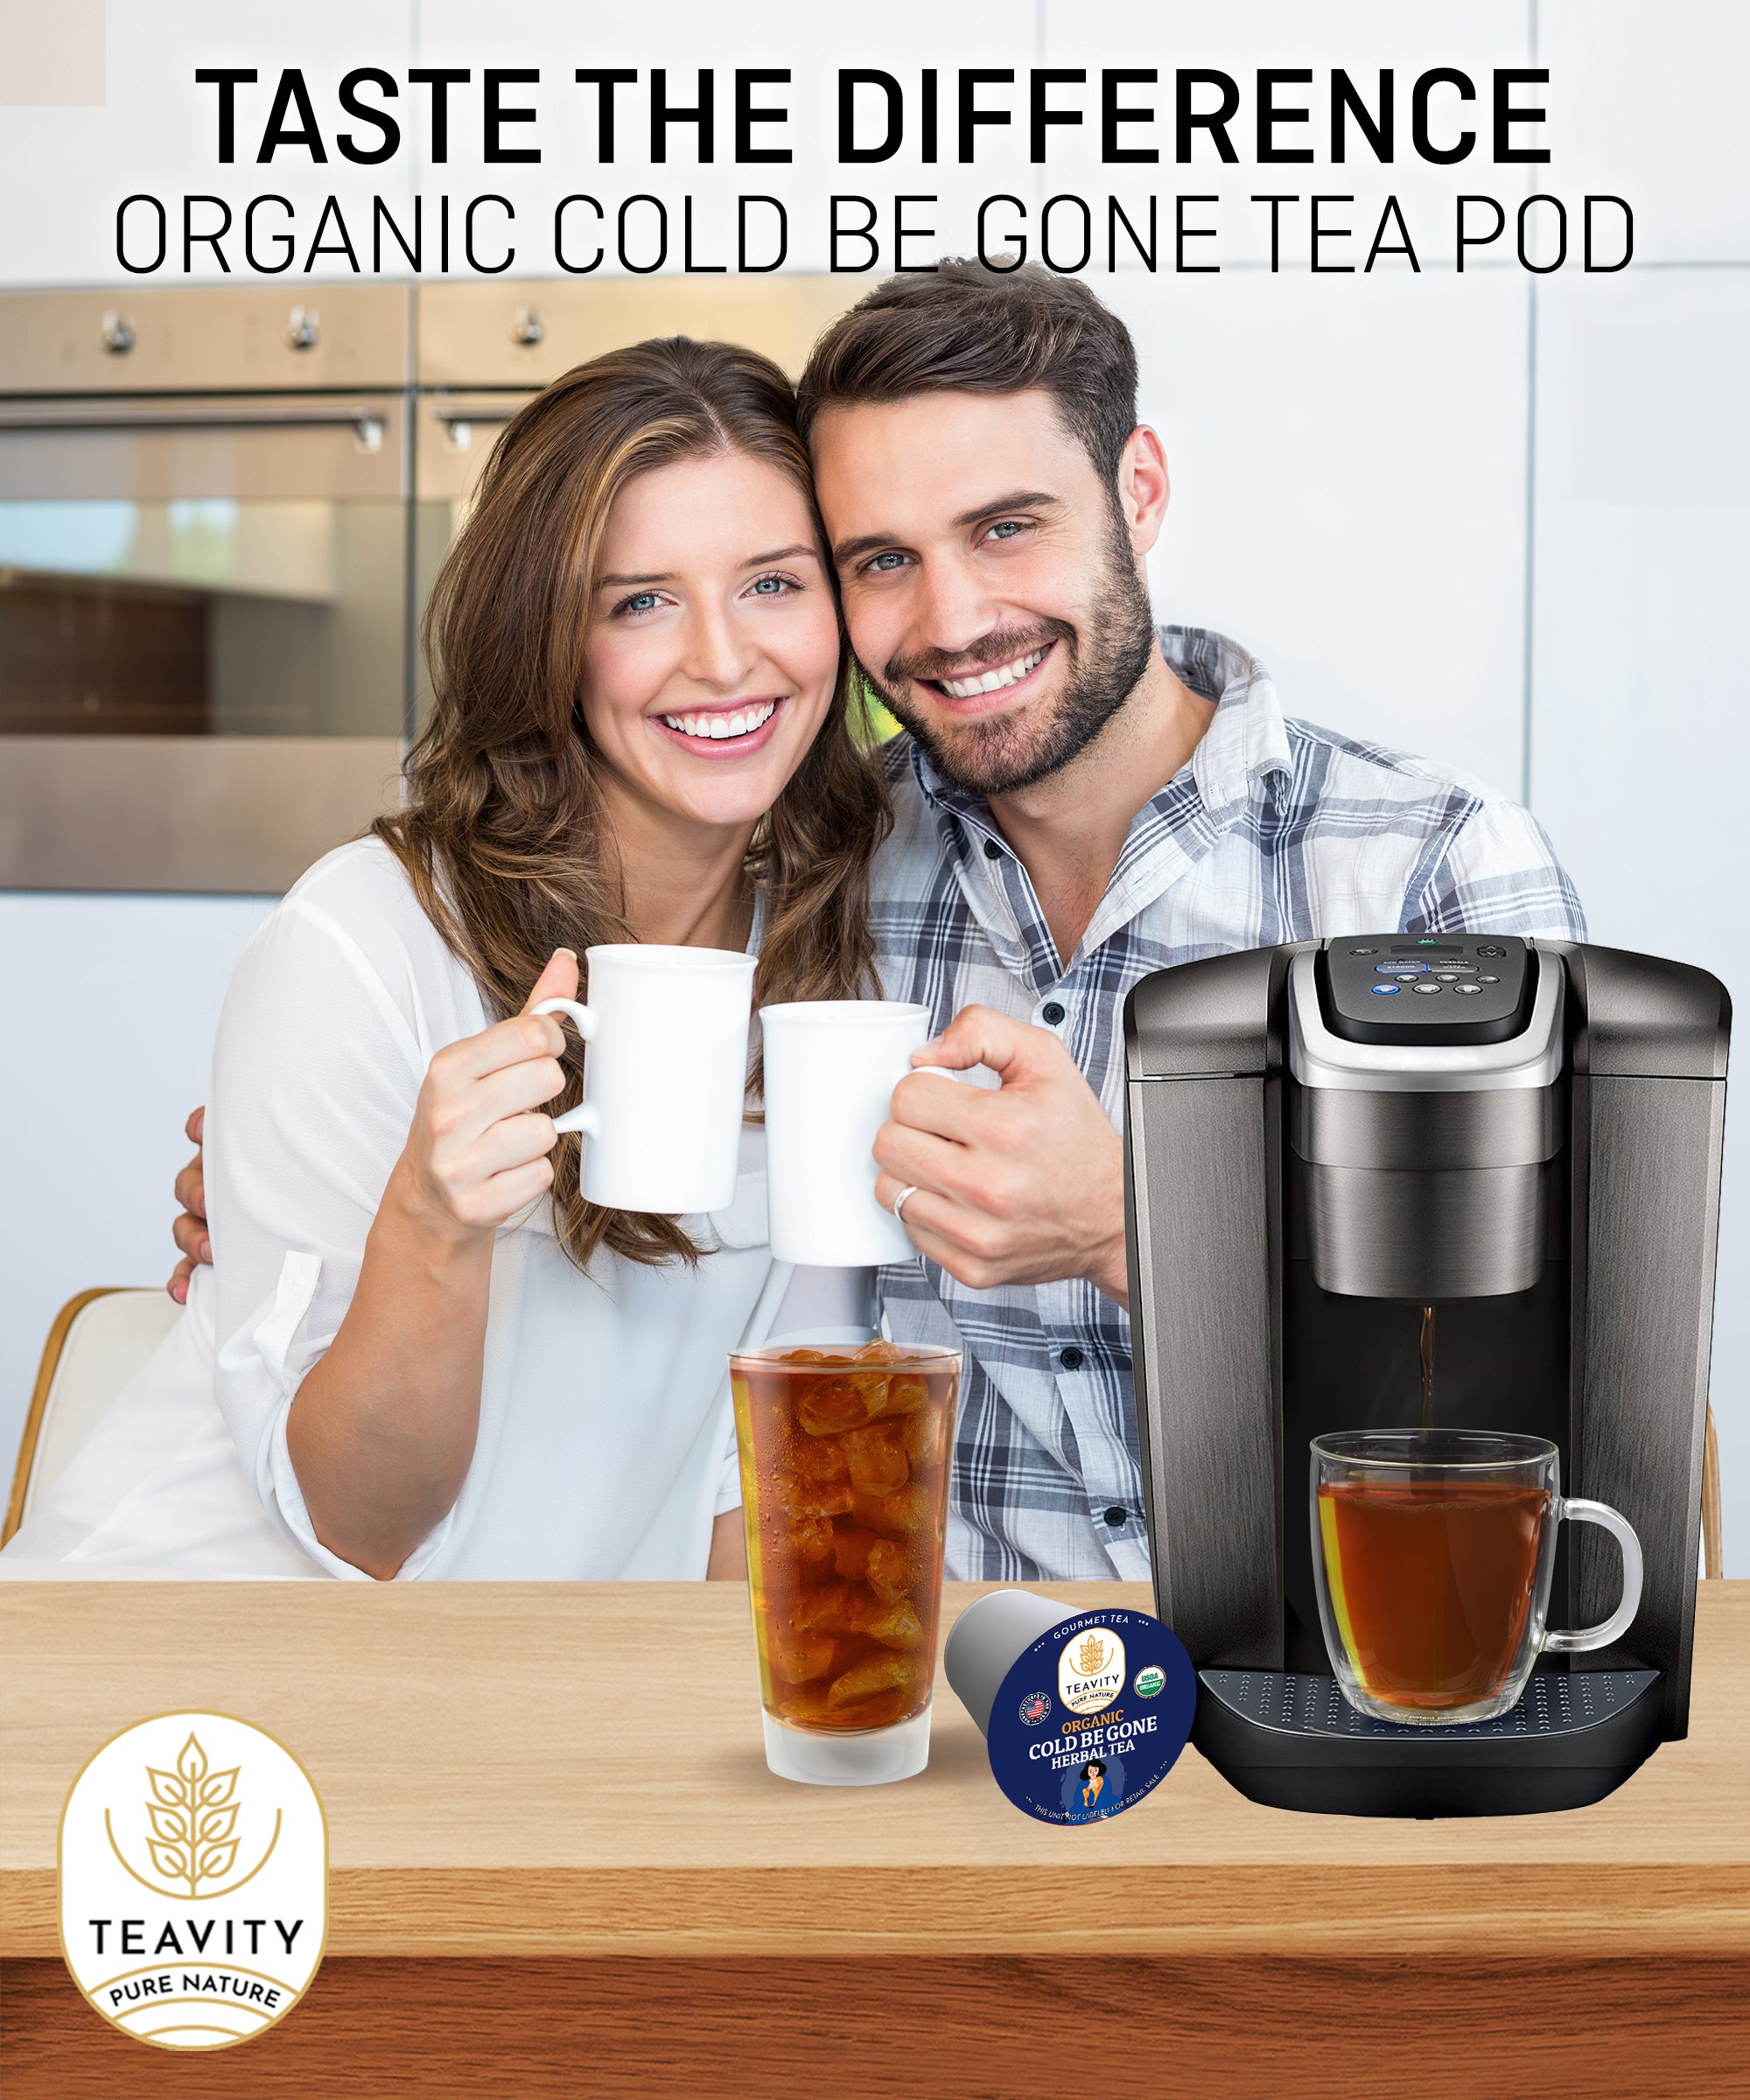 Organic Cold Be Gone Tea